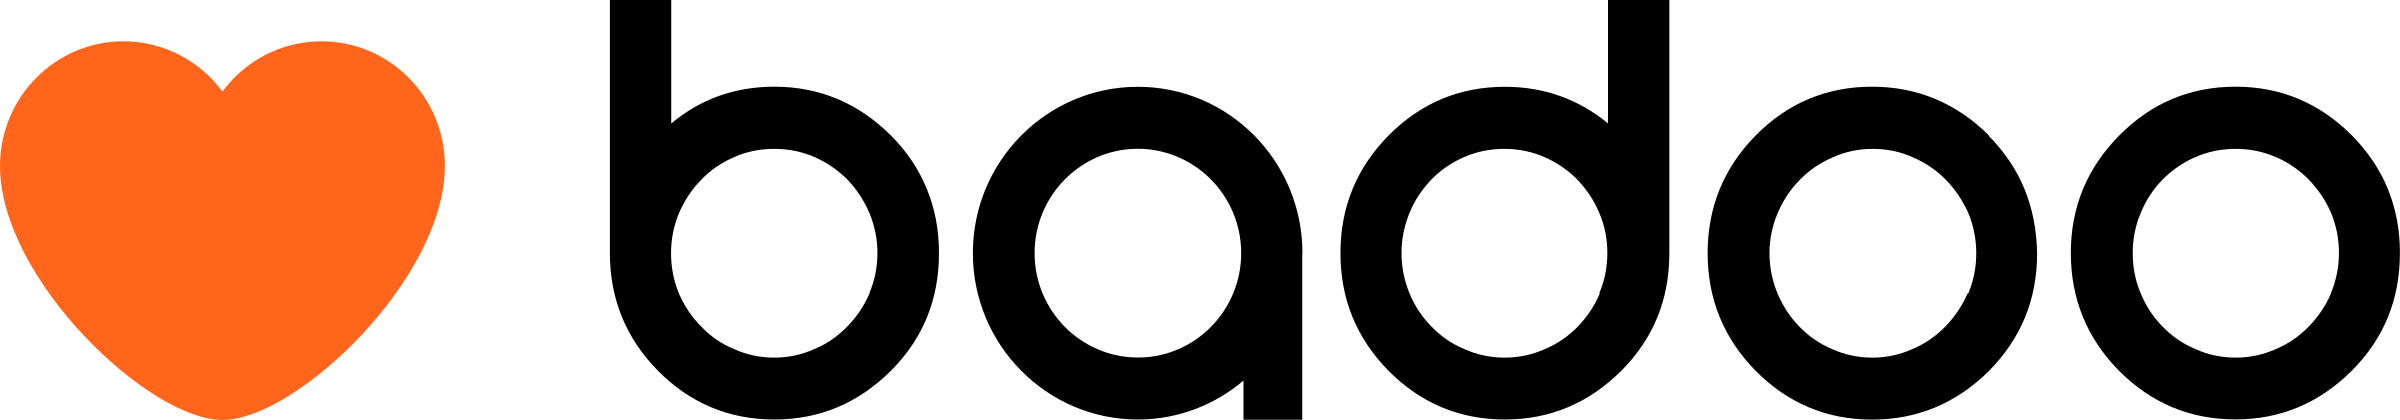 Badoo Logo - Badoo Logo PNG Transparent & SVG Vector